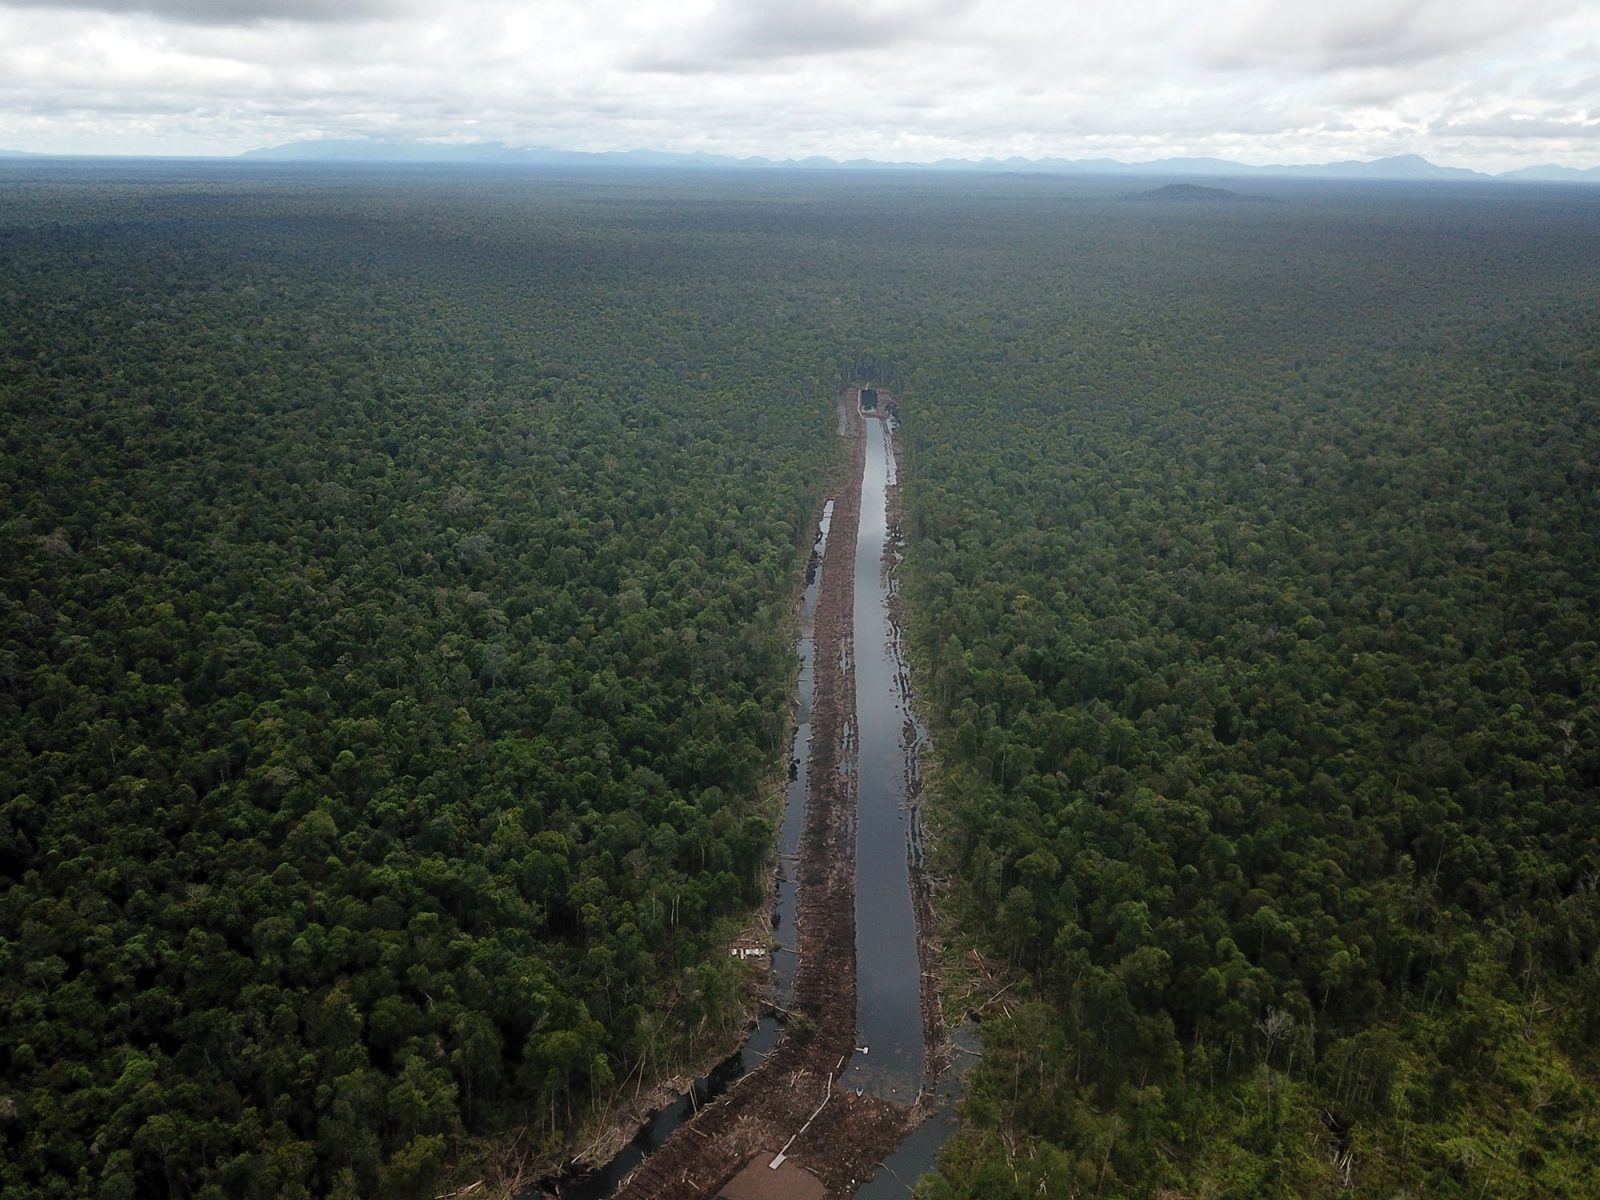 Laporan Penilaian Cepat Populasi Orangutan, Biodiversity, Vegetasi dan Kedalaman Gambut PT. Mohairson Pawan Khatulistiwa (MPK) Blok Hutan Sungai Putri (Sentap Kancang) Ketapang, Kalimantan Barat